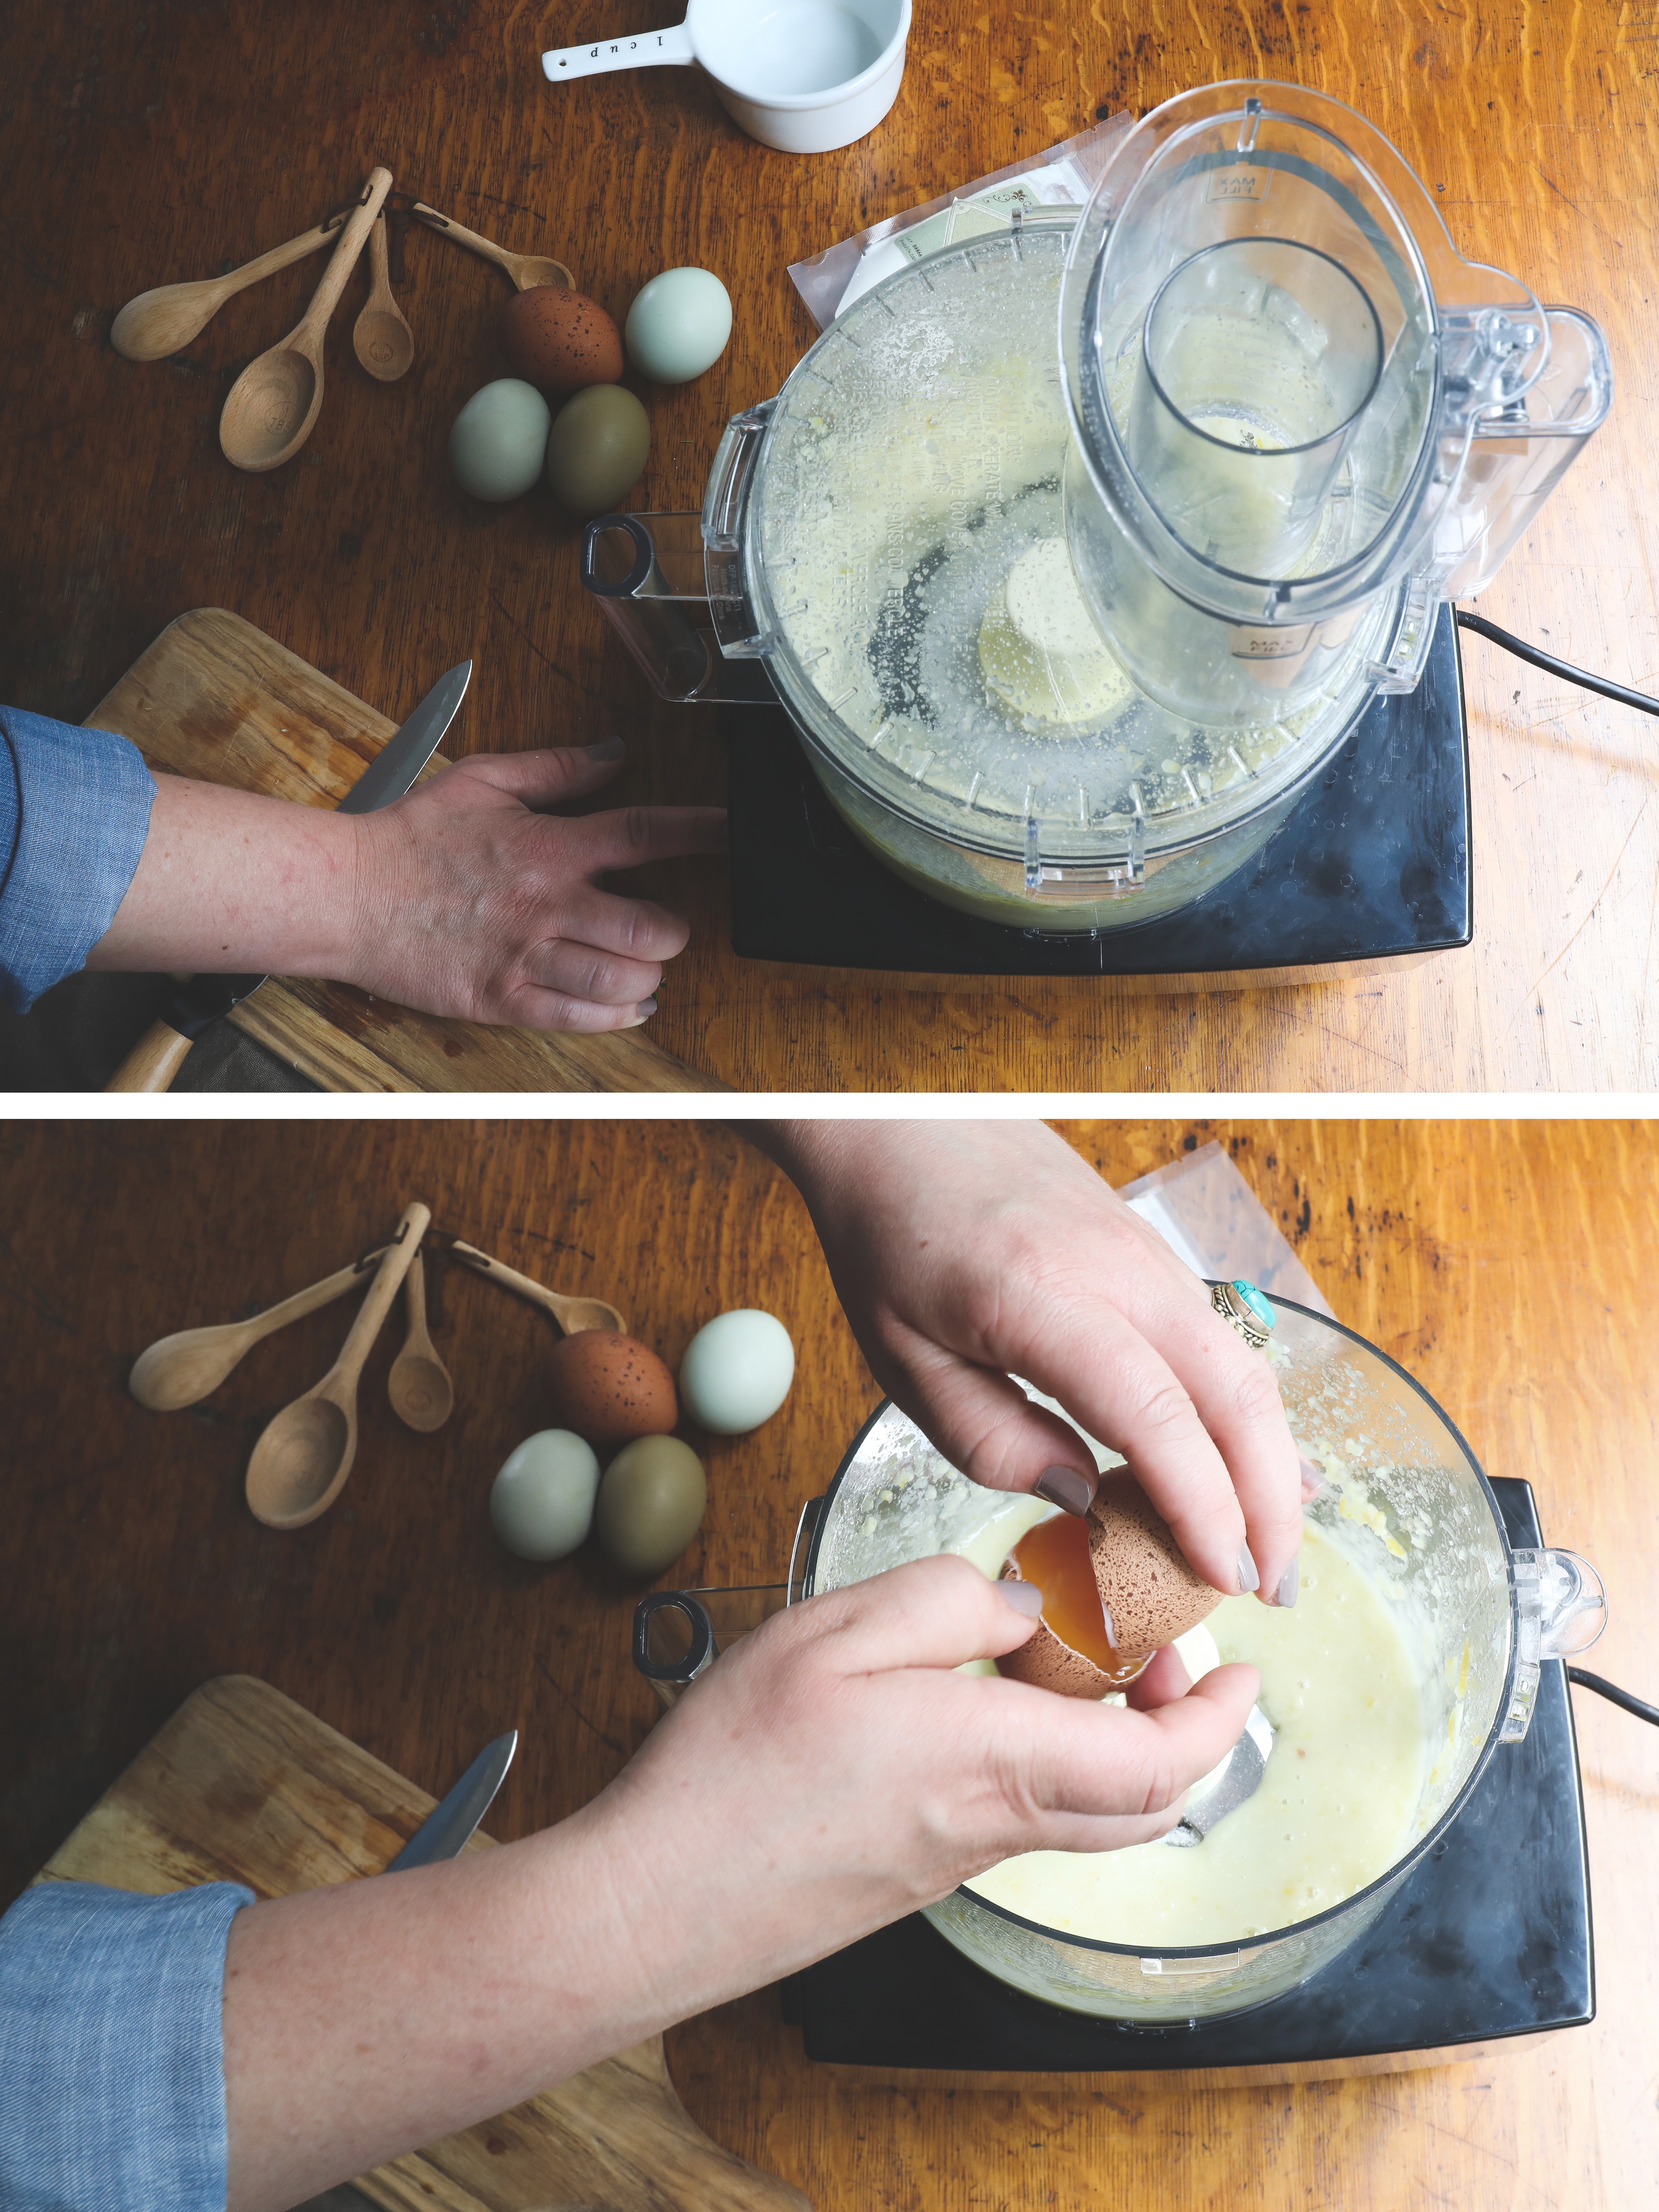 Hands cracking eggs into food processor to make lemon lavender thyme bars